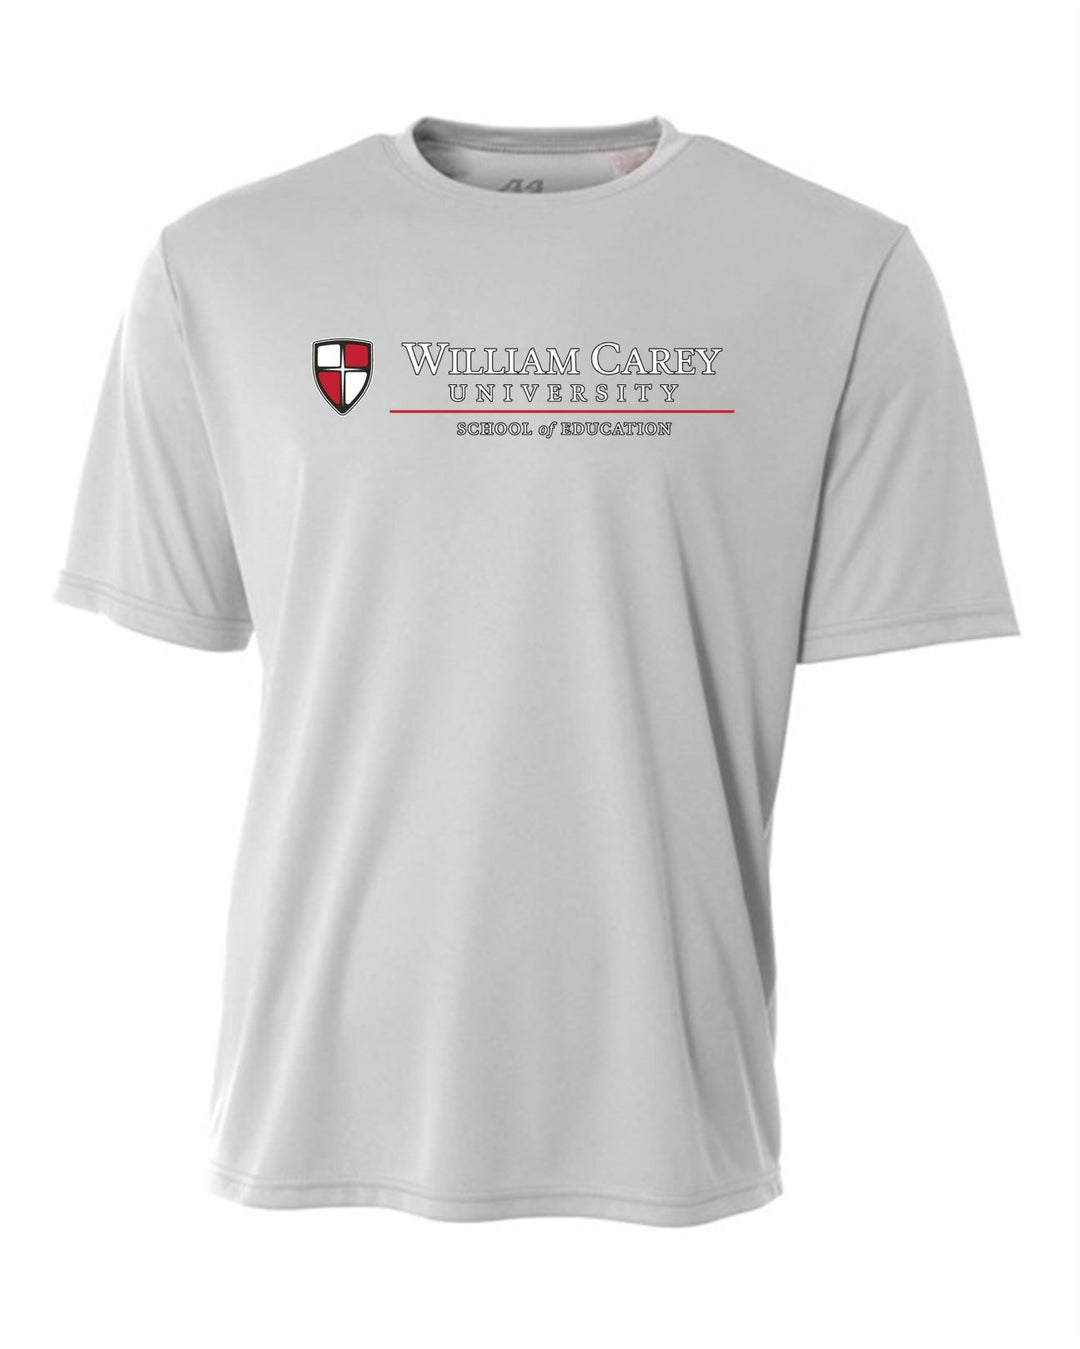 WCU School Of Education Men's Short-Sleeve Performance Shirt WCU Education Silver Grey Mens Small - Third Coast Soccer